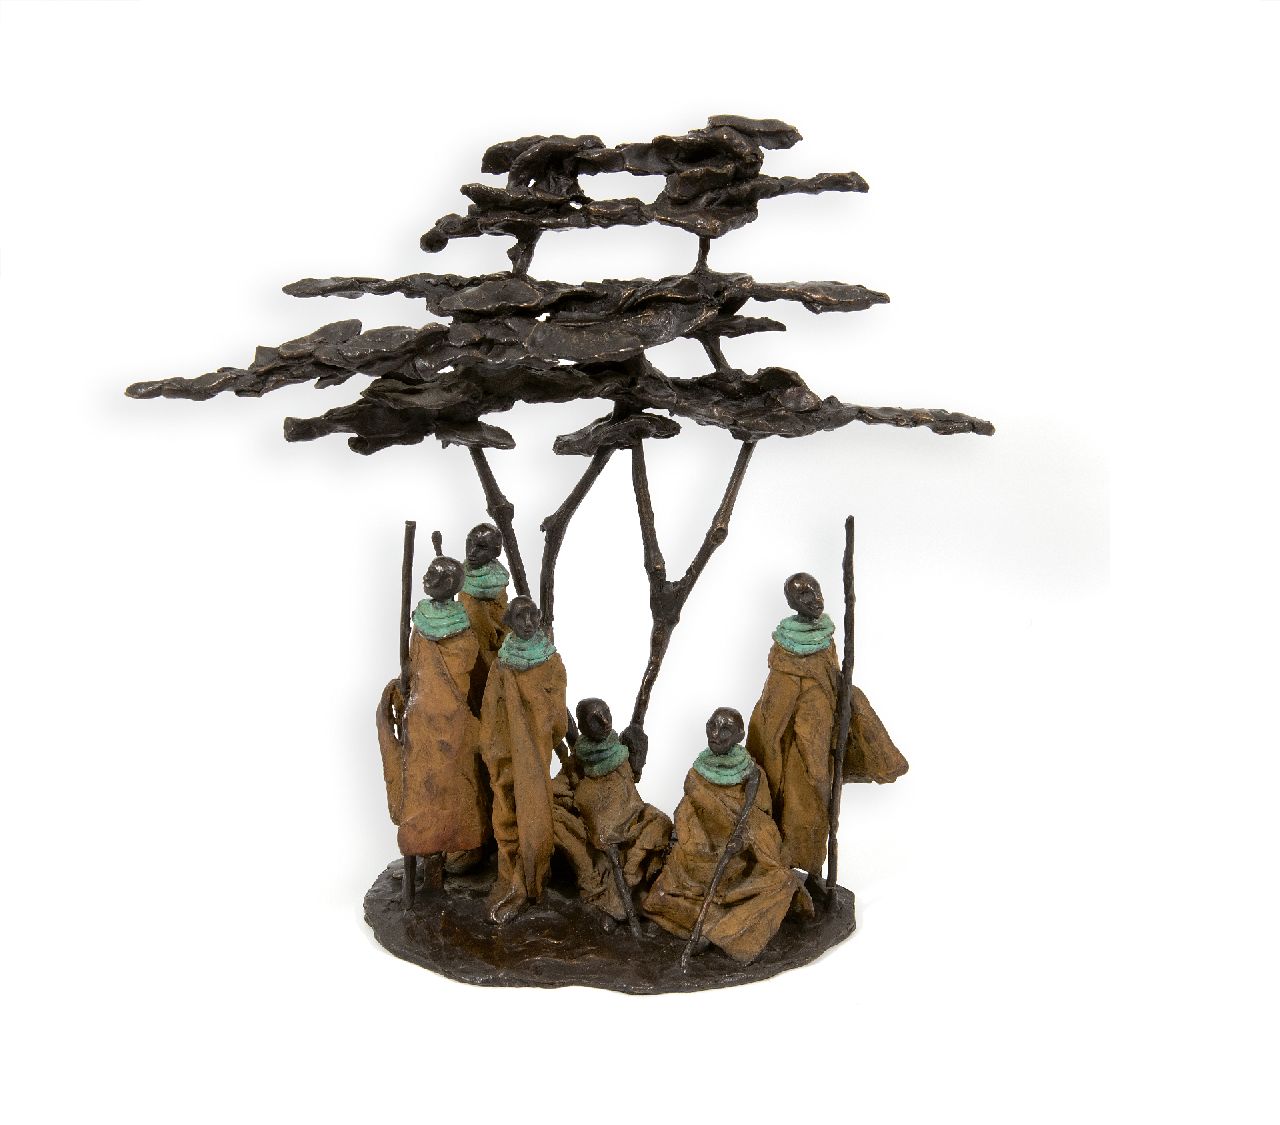 Houtkamp M.  | Marianne Houtkamp, Masai unter einem Flammenbaum, Bronze 40,0 cm, gesigneerd op basis met monogram